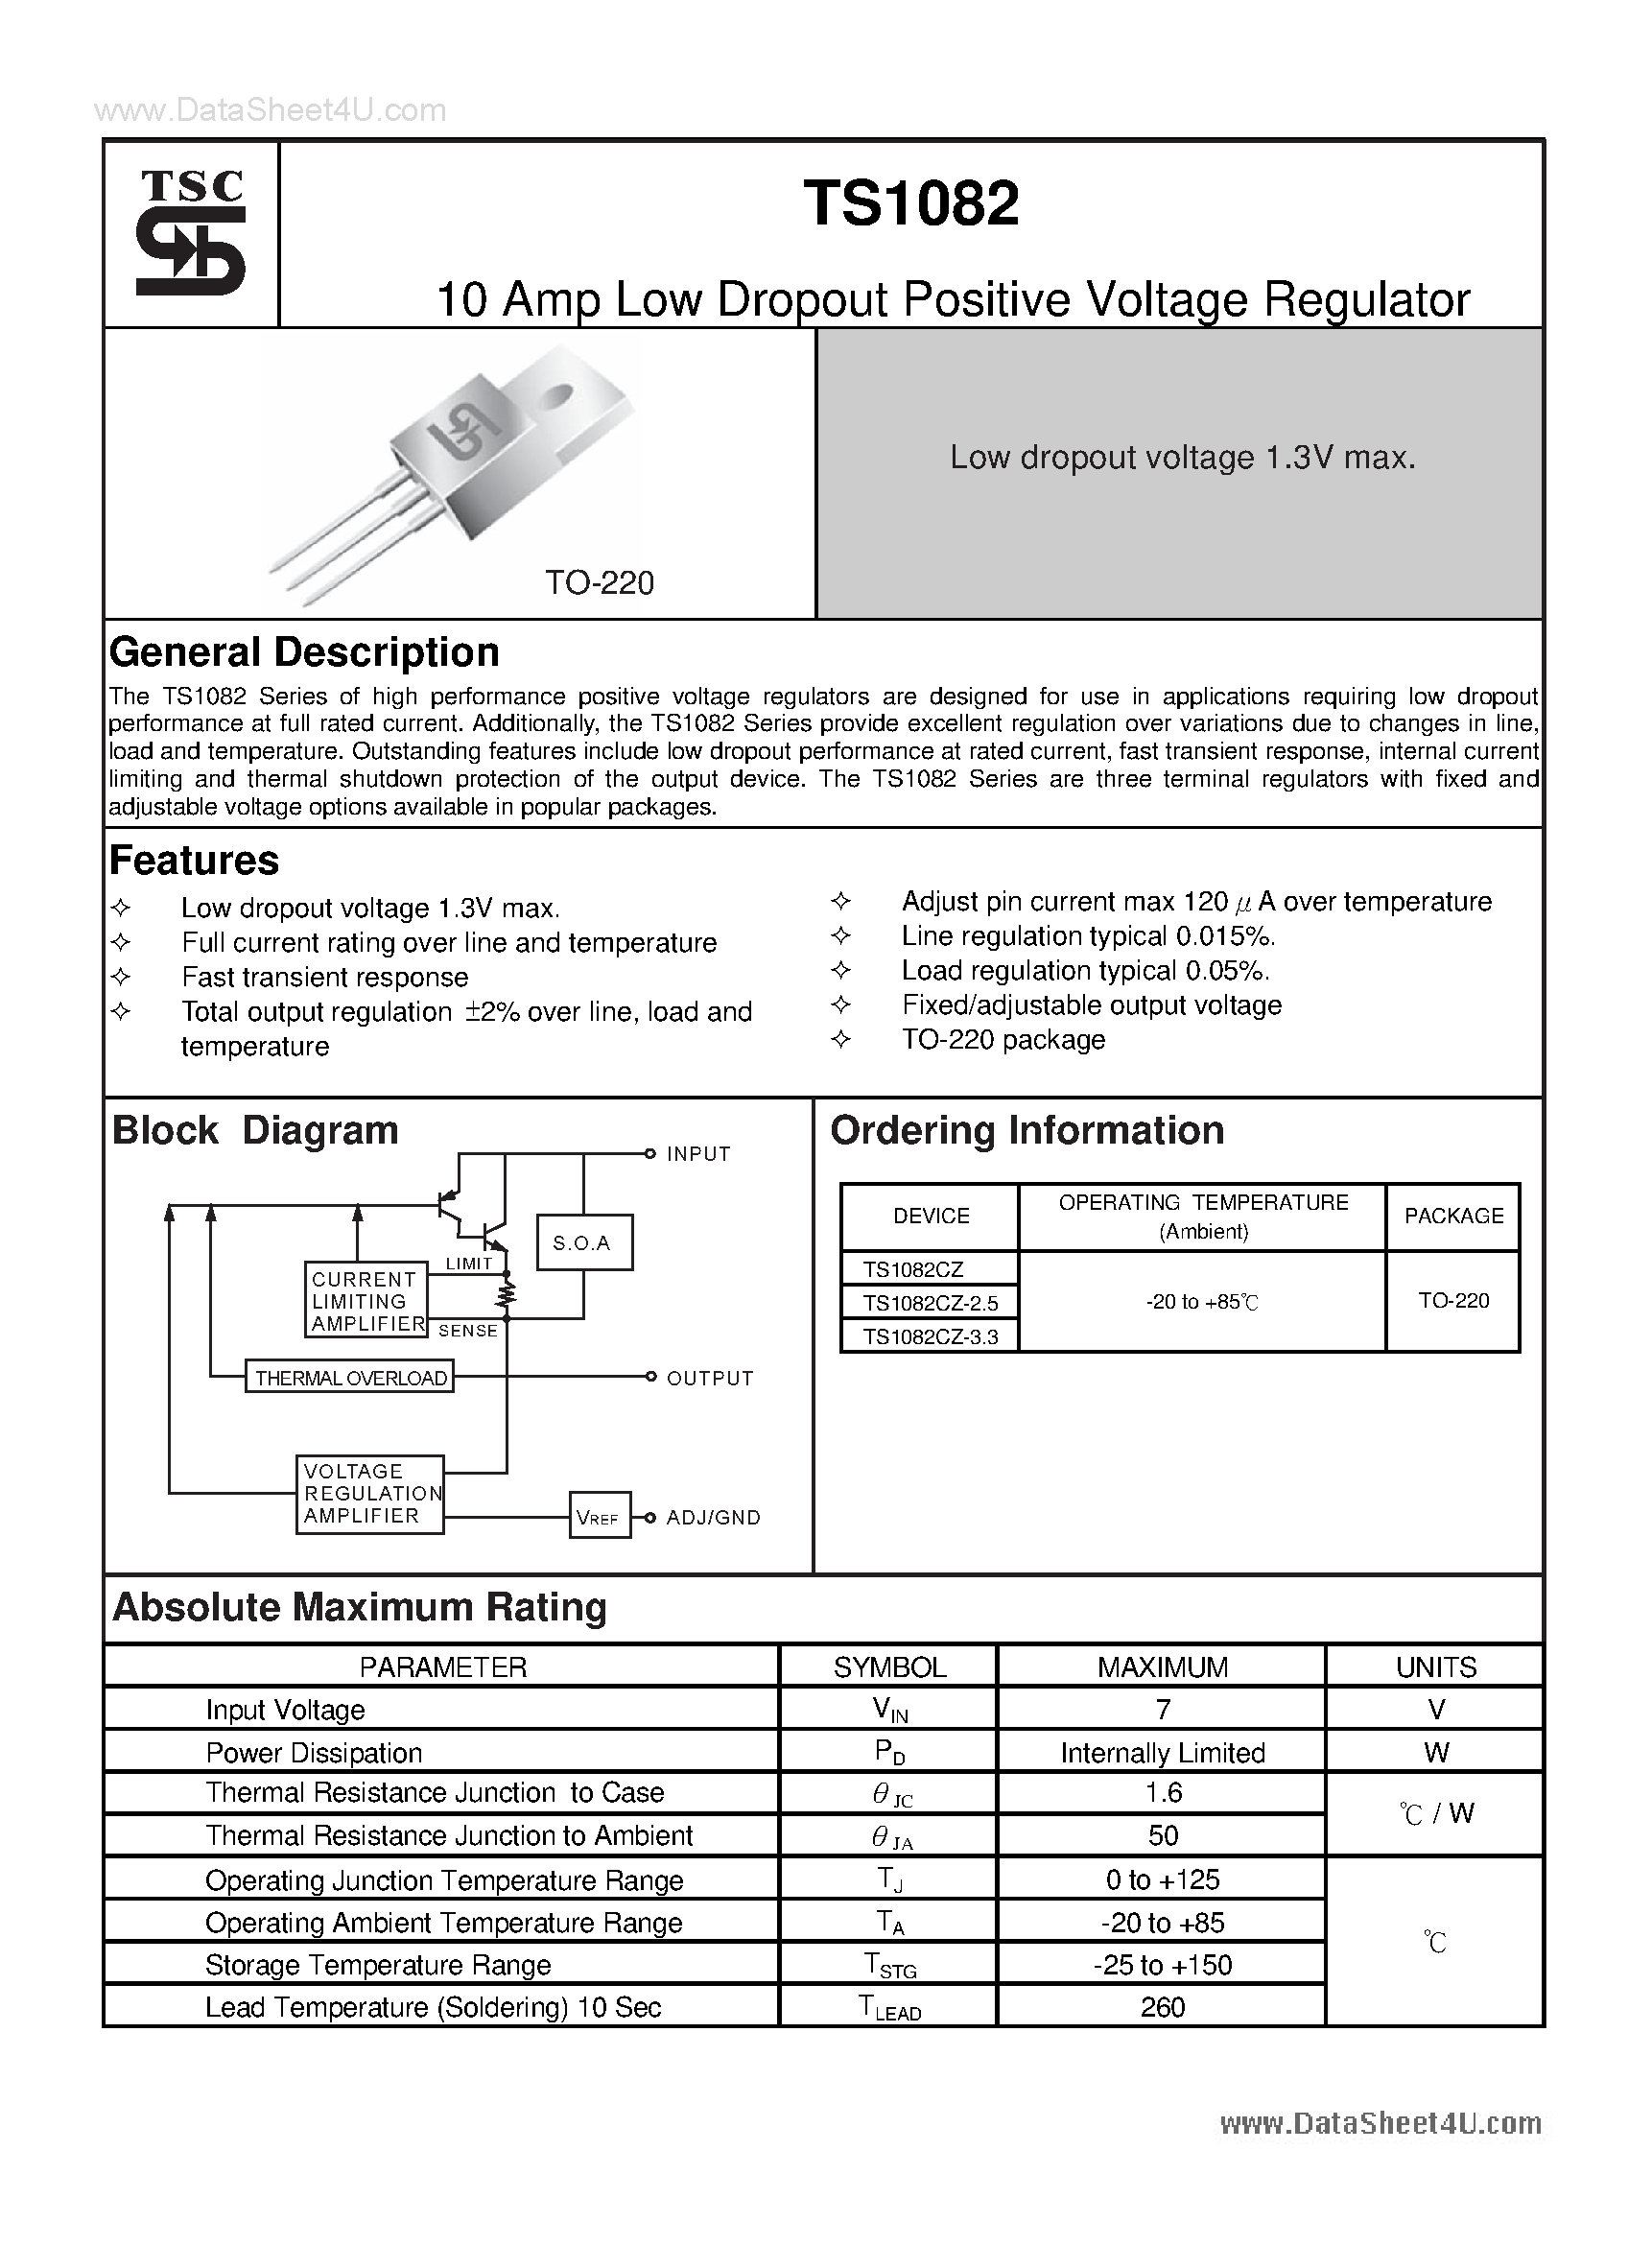 Даташит TS1082 - 10 Amp Low Dropout Positive Voltage Regulator страница 1